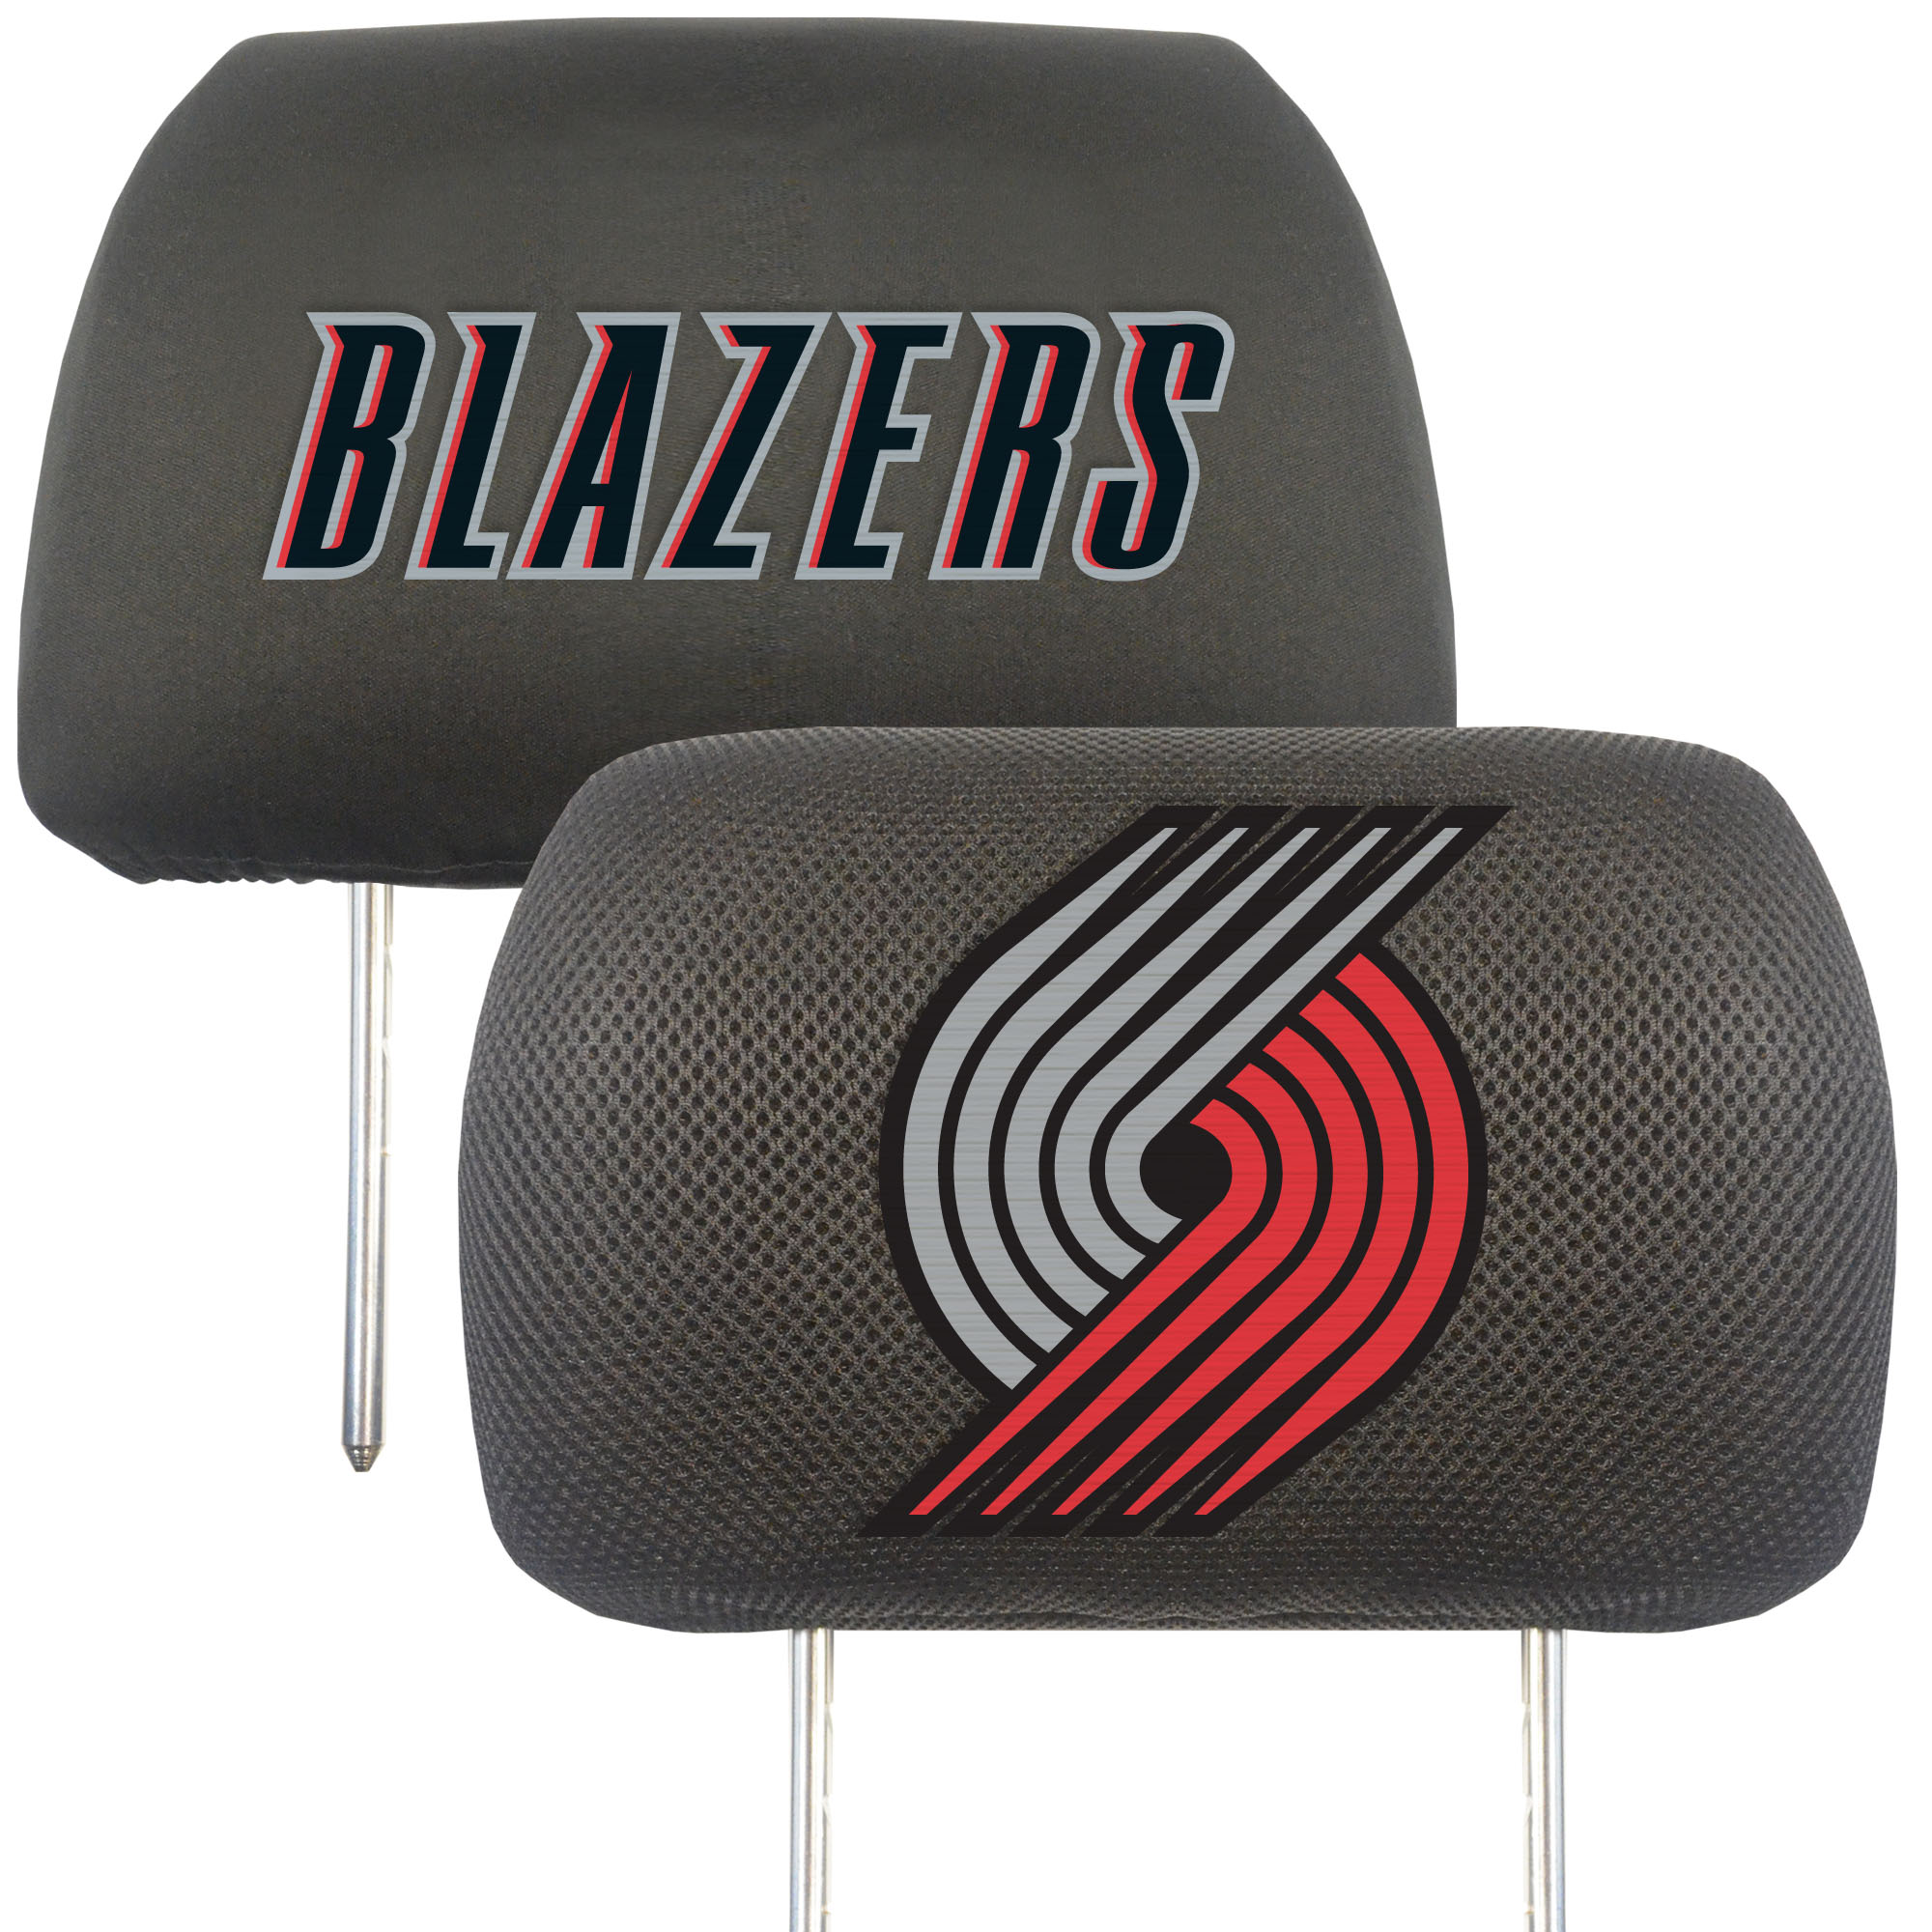 Portland Trail Blazers Headrest Covers FanMats Special Order